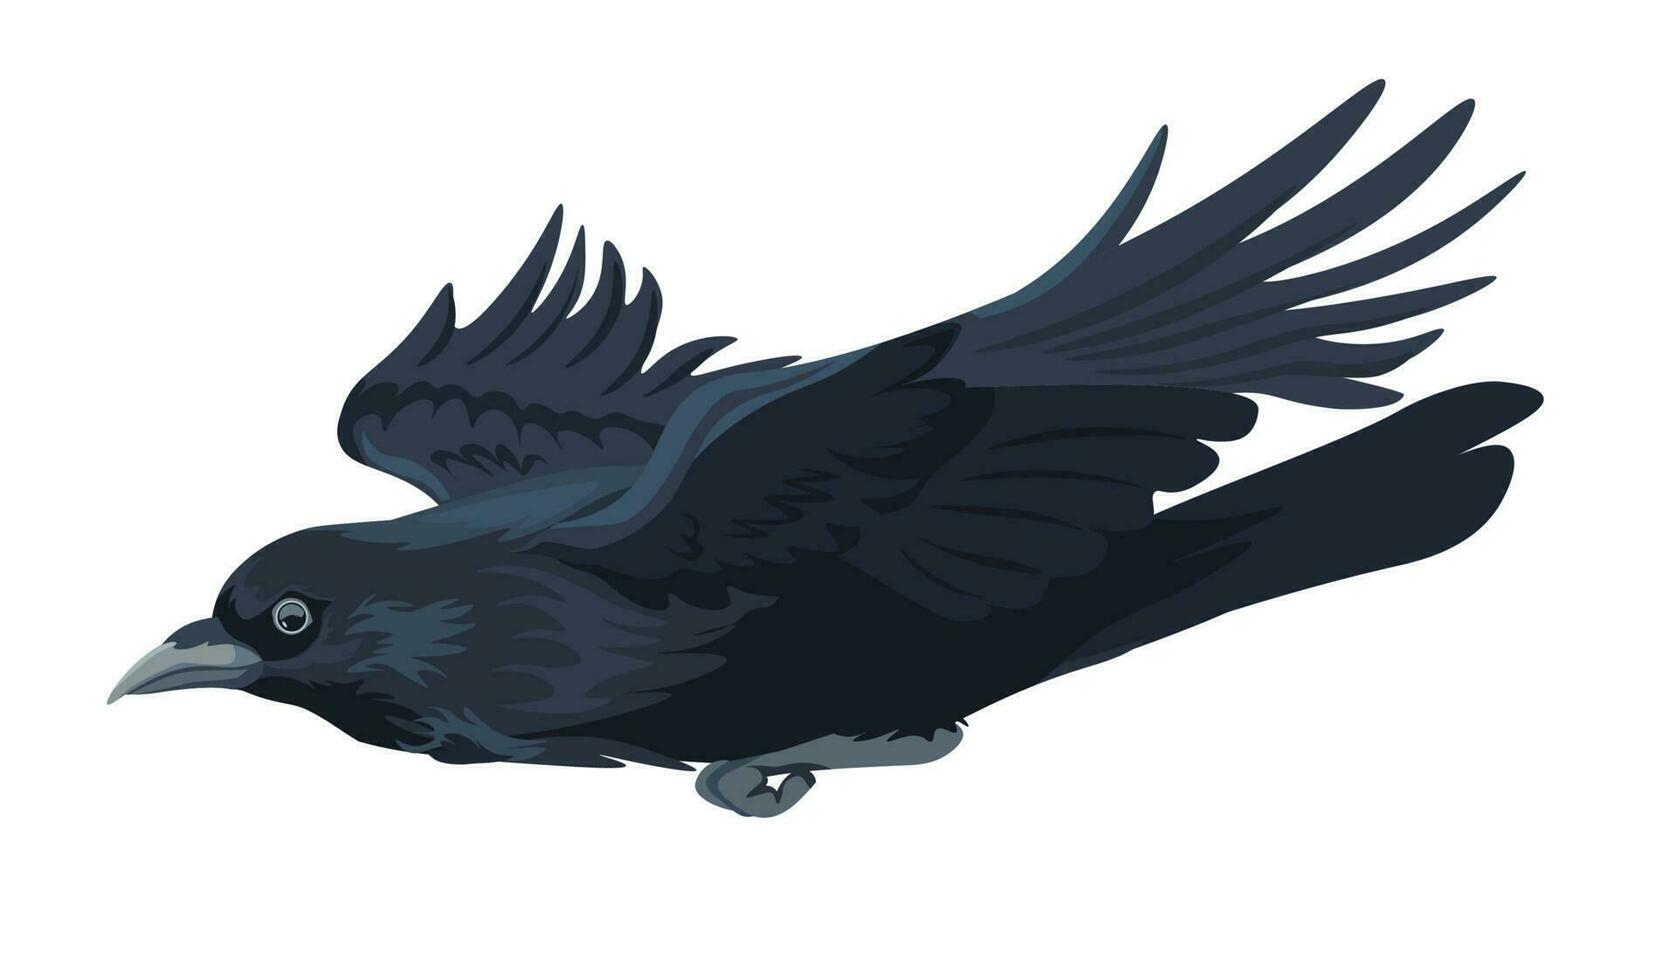 Large black bird, flying crow or rook avian animal vector